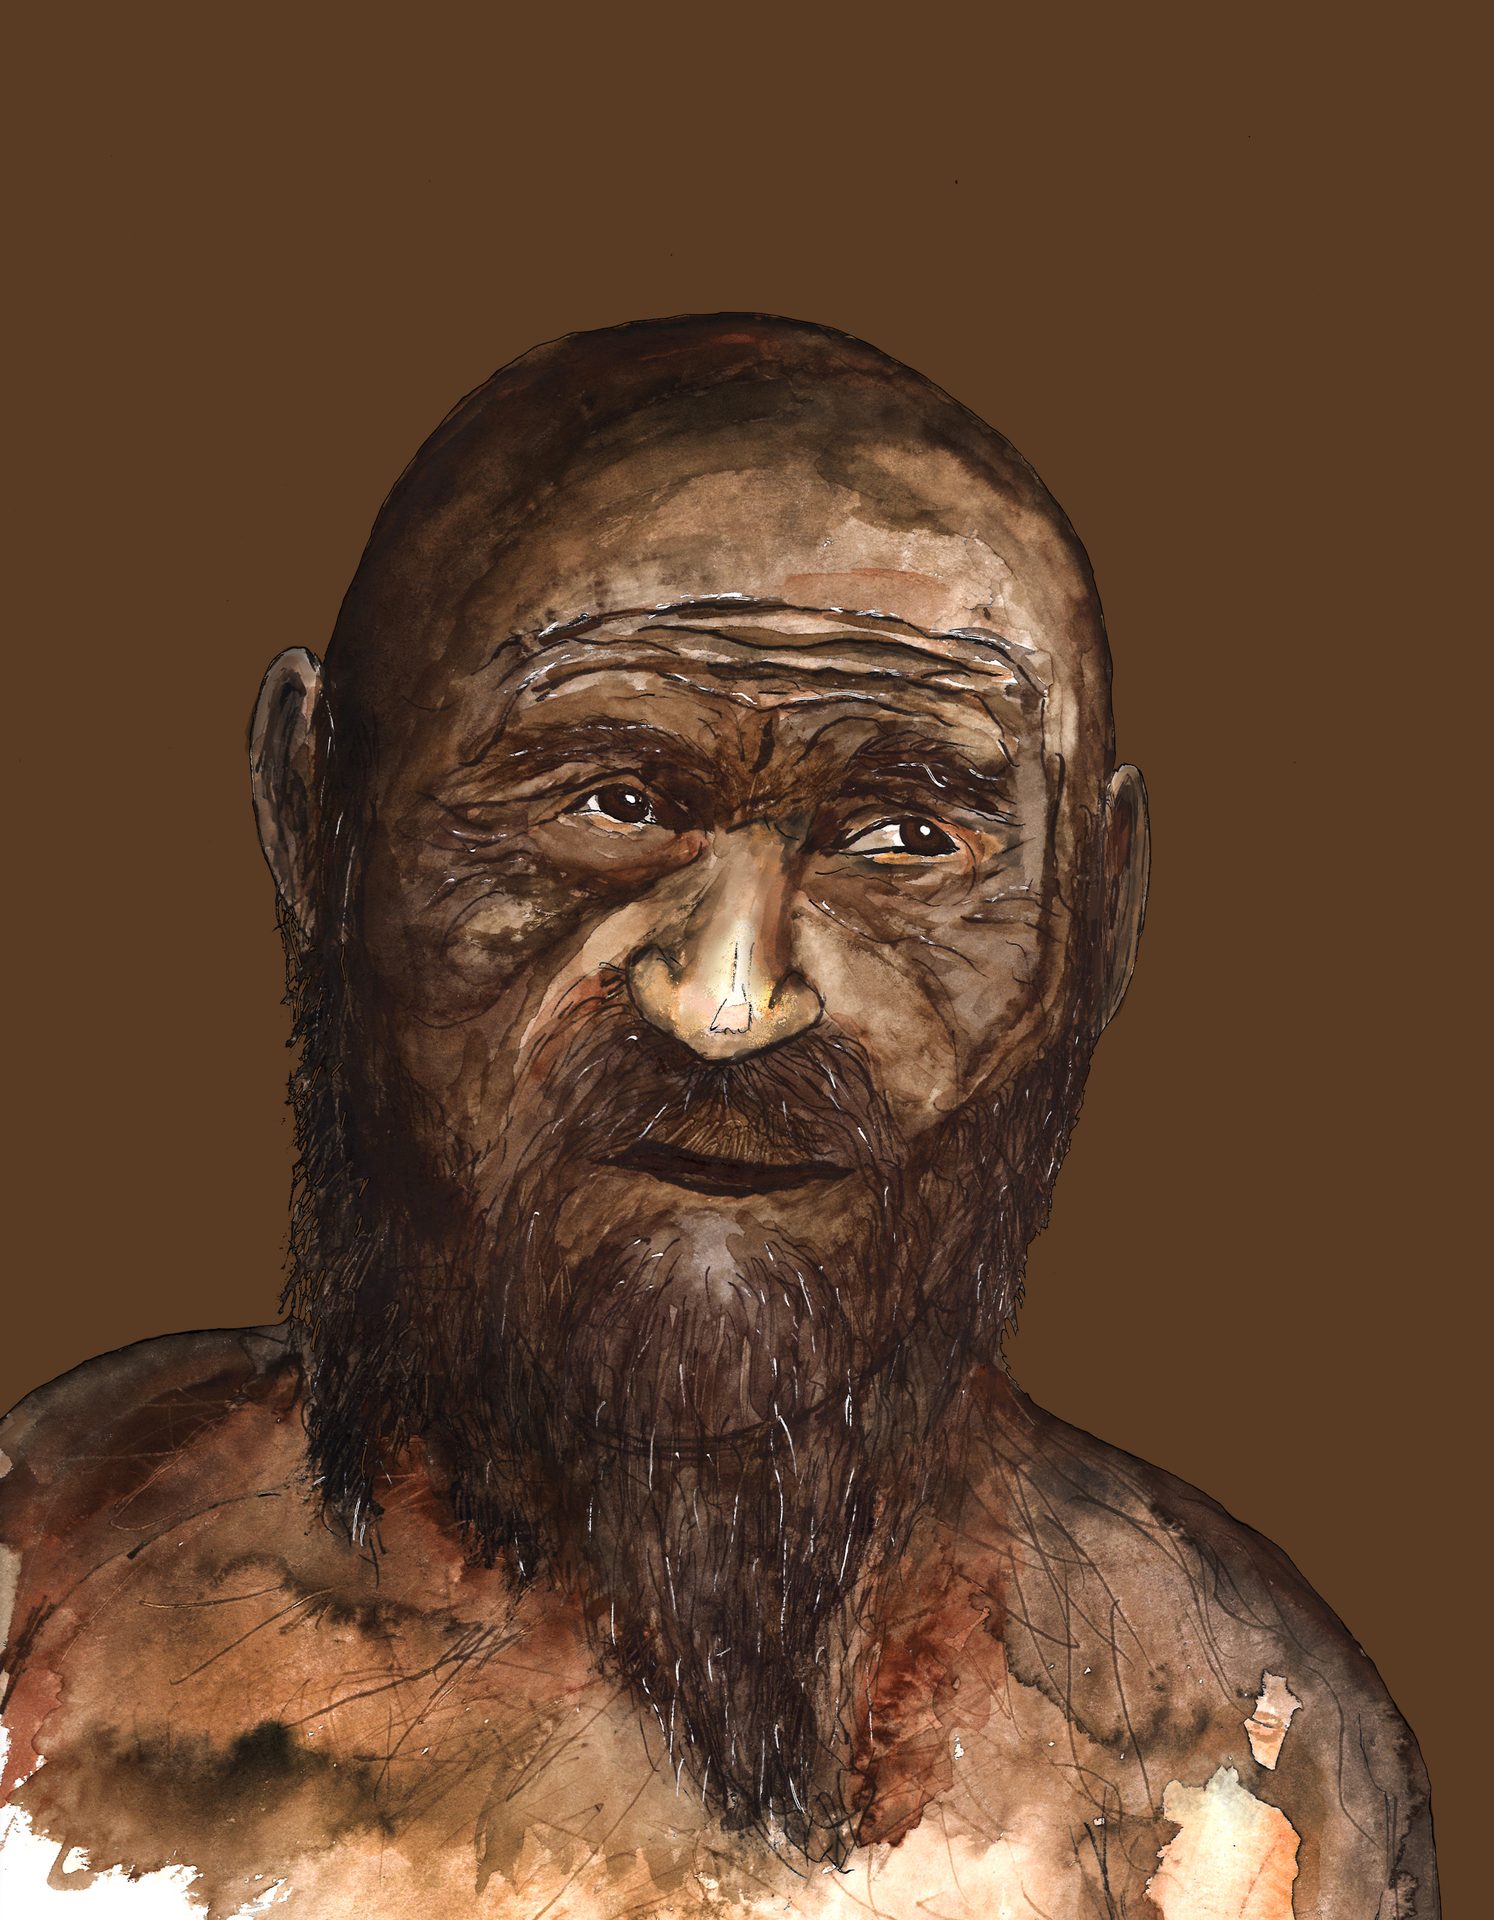 Genetic Analysis of 'Ötzi the Iceman' Reveals Ancient Mummy's Ancestry